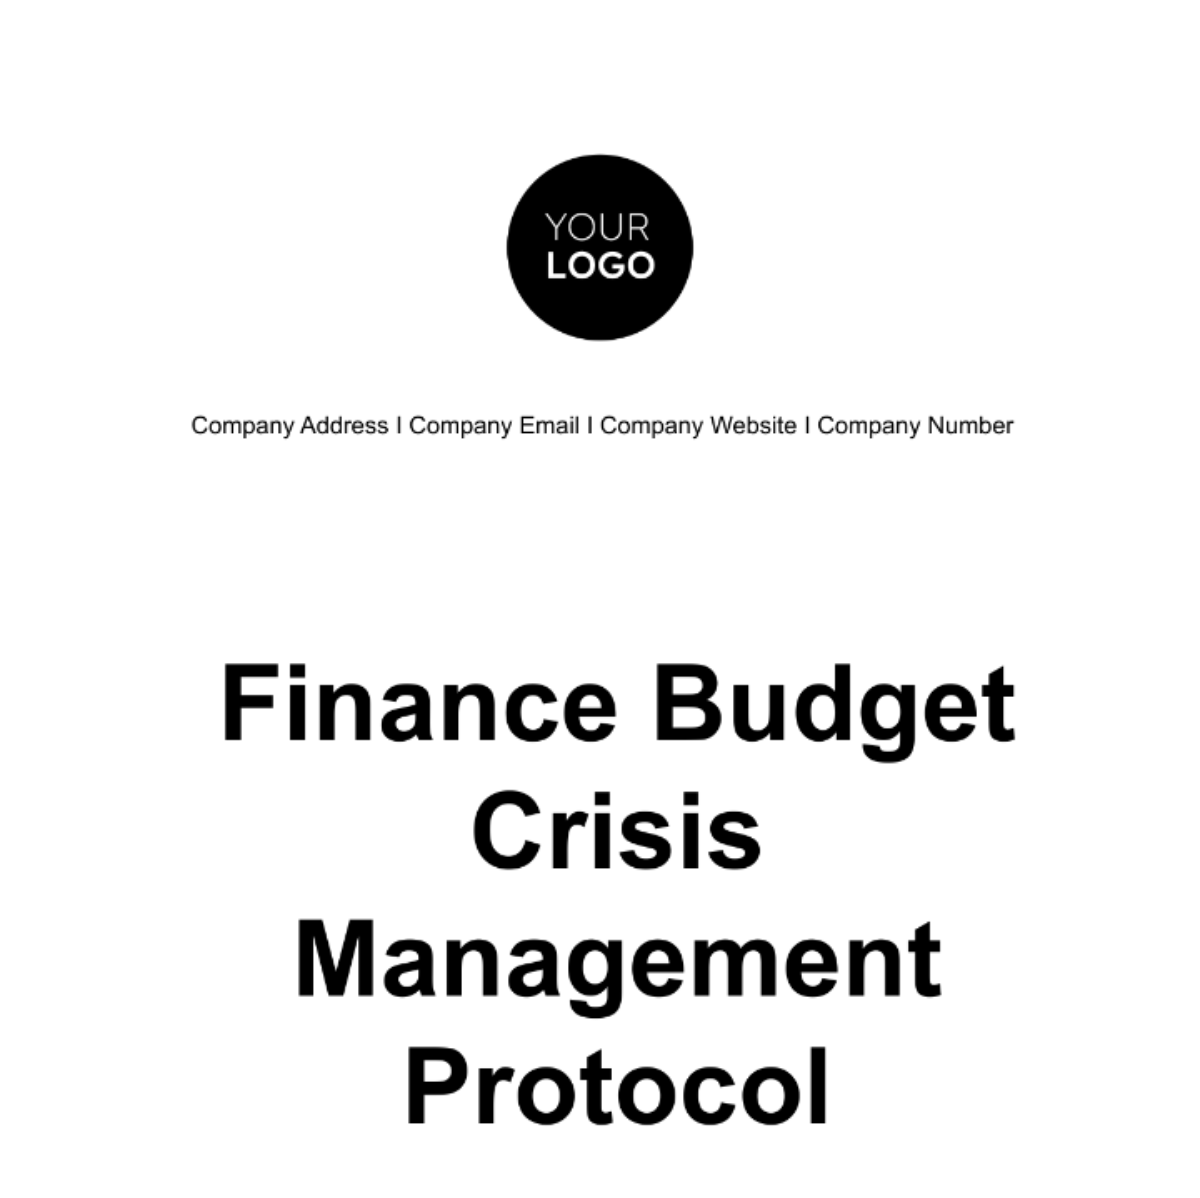 Finance Budget Crisis Management Protocol Template